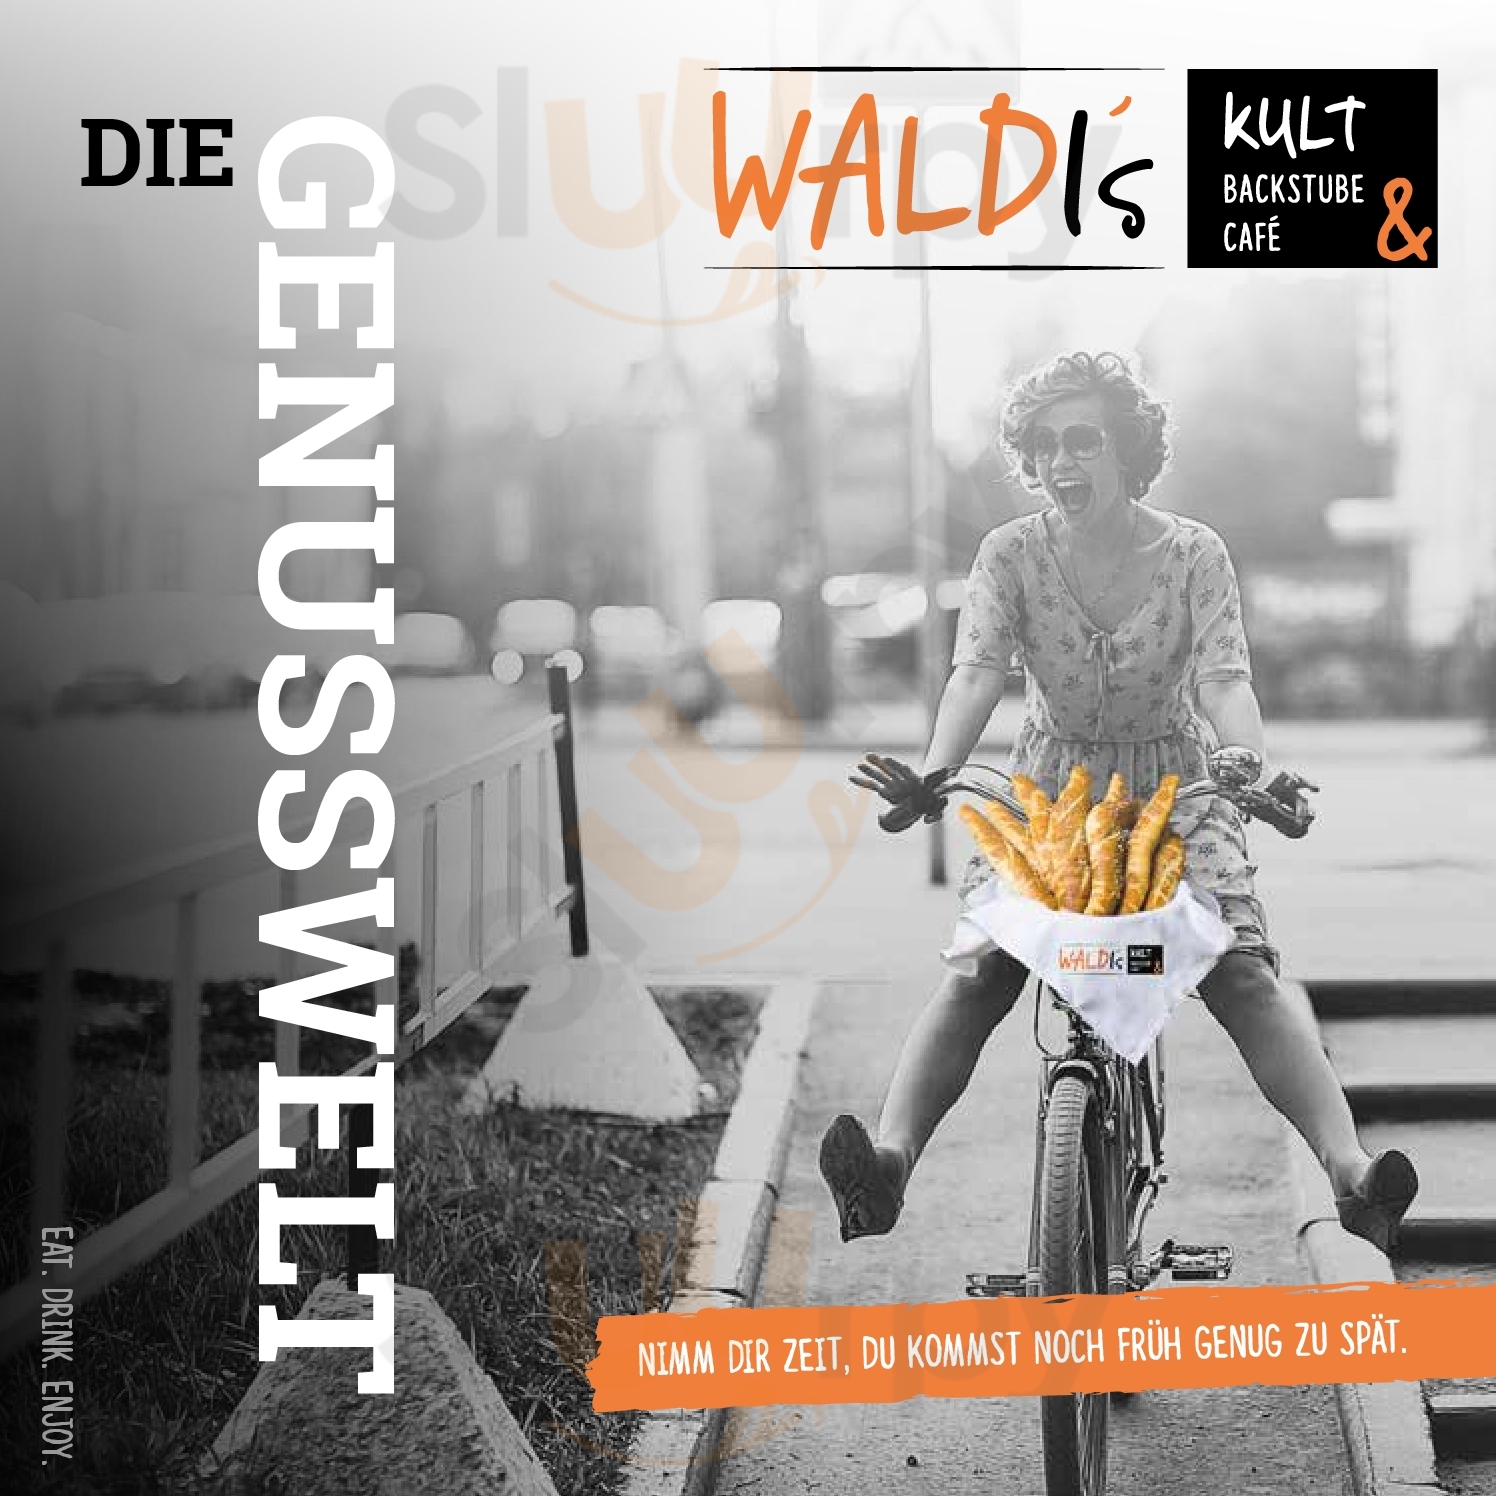 Waldi‘s Kult Café Bad Schallerbach Menu - 1